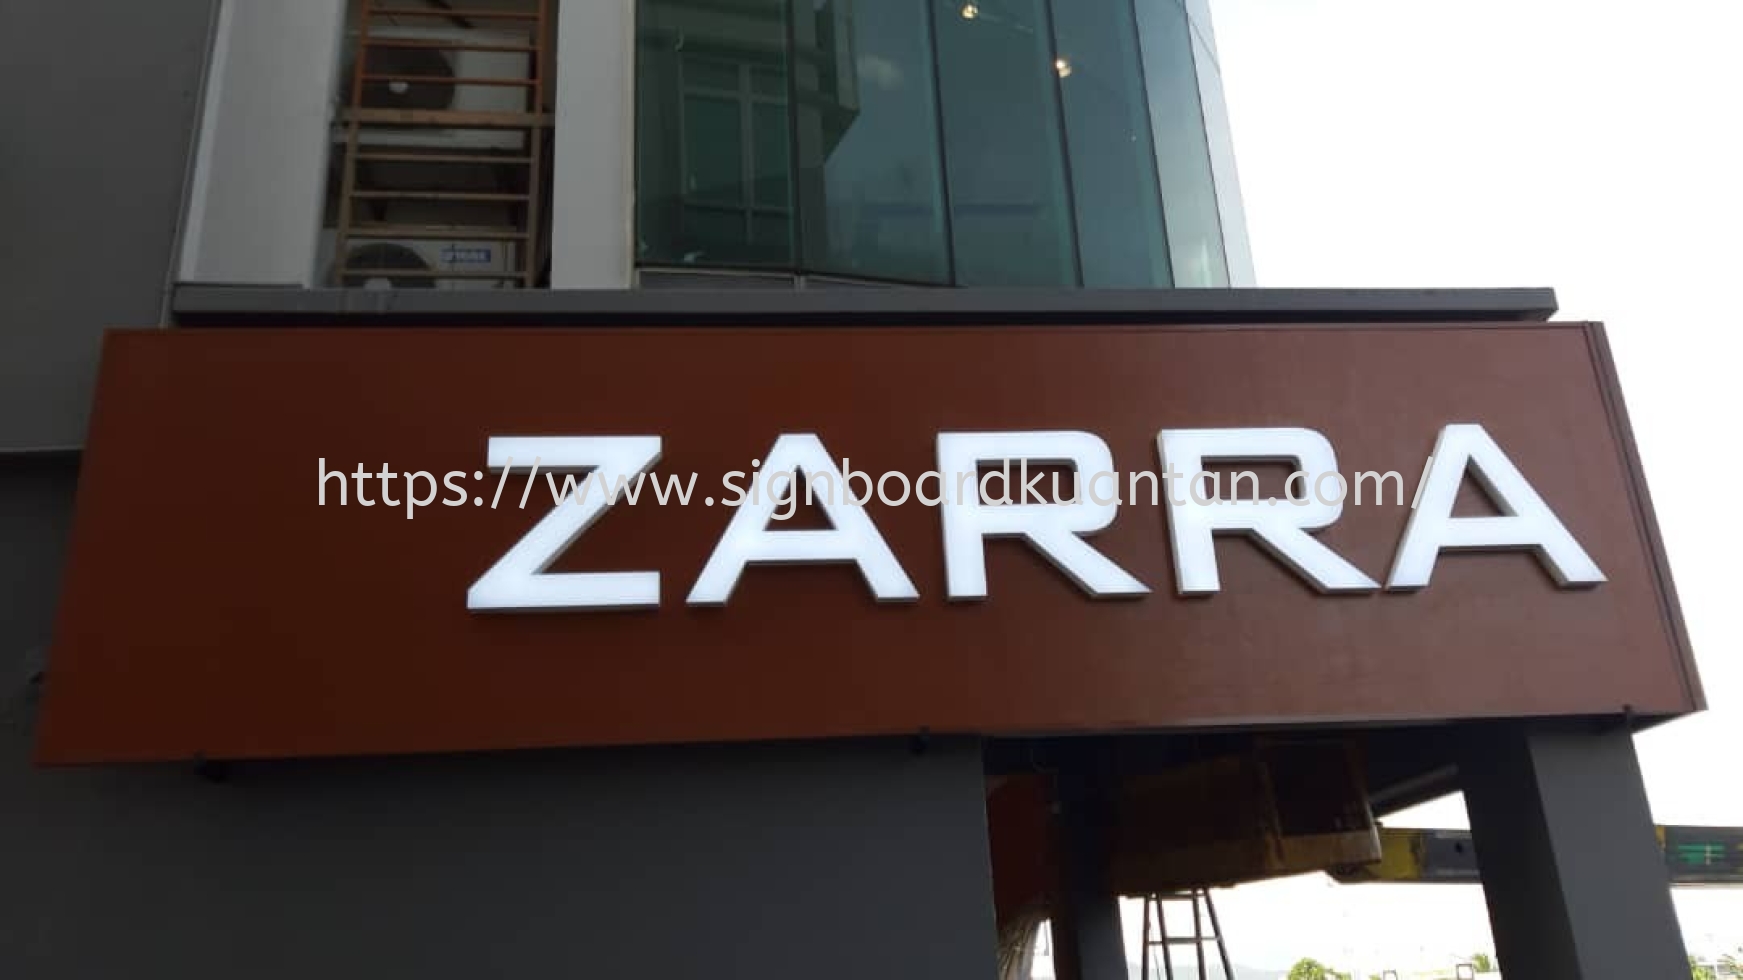 ZARRA PERABOT STAINLESS STEEL 3D BOX UP SIGNAGE AT KUANTAN Bandar Indera Mahkota